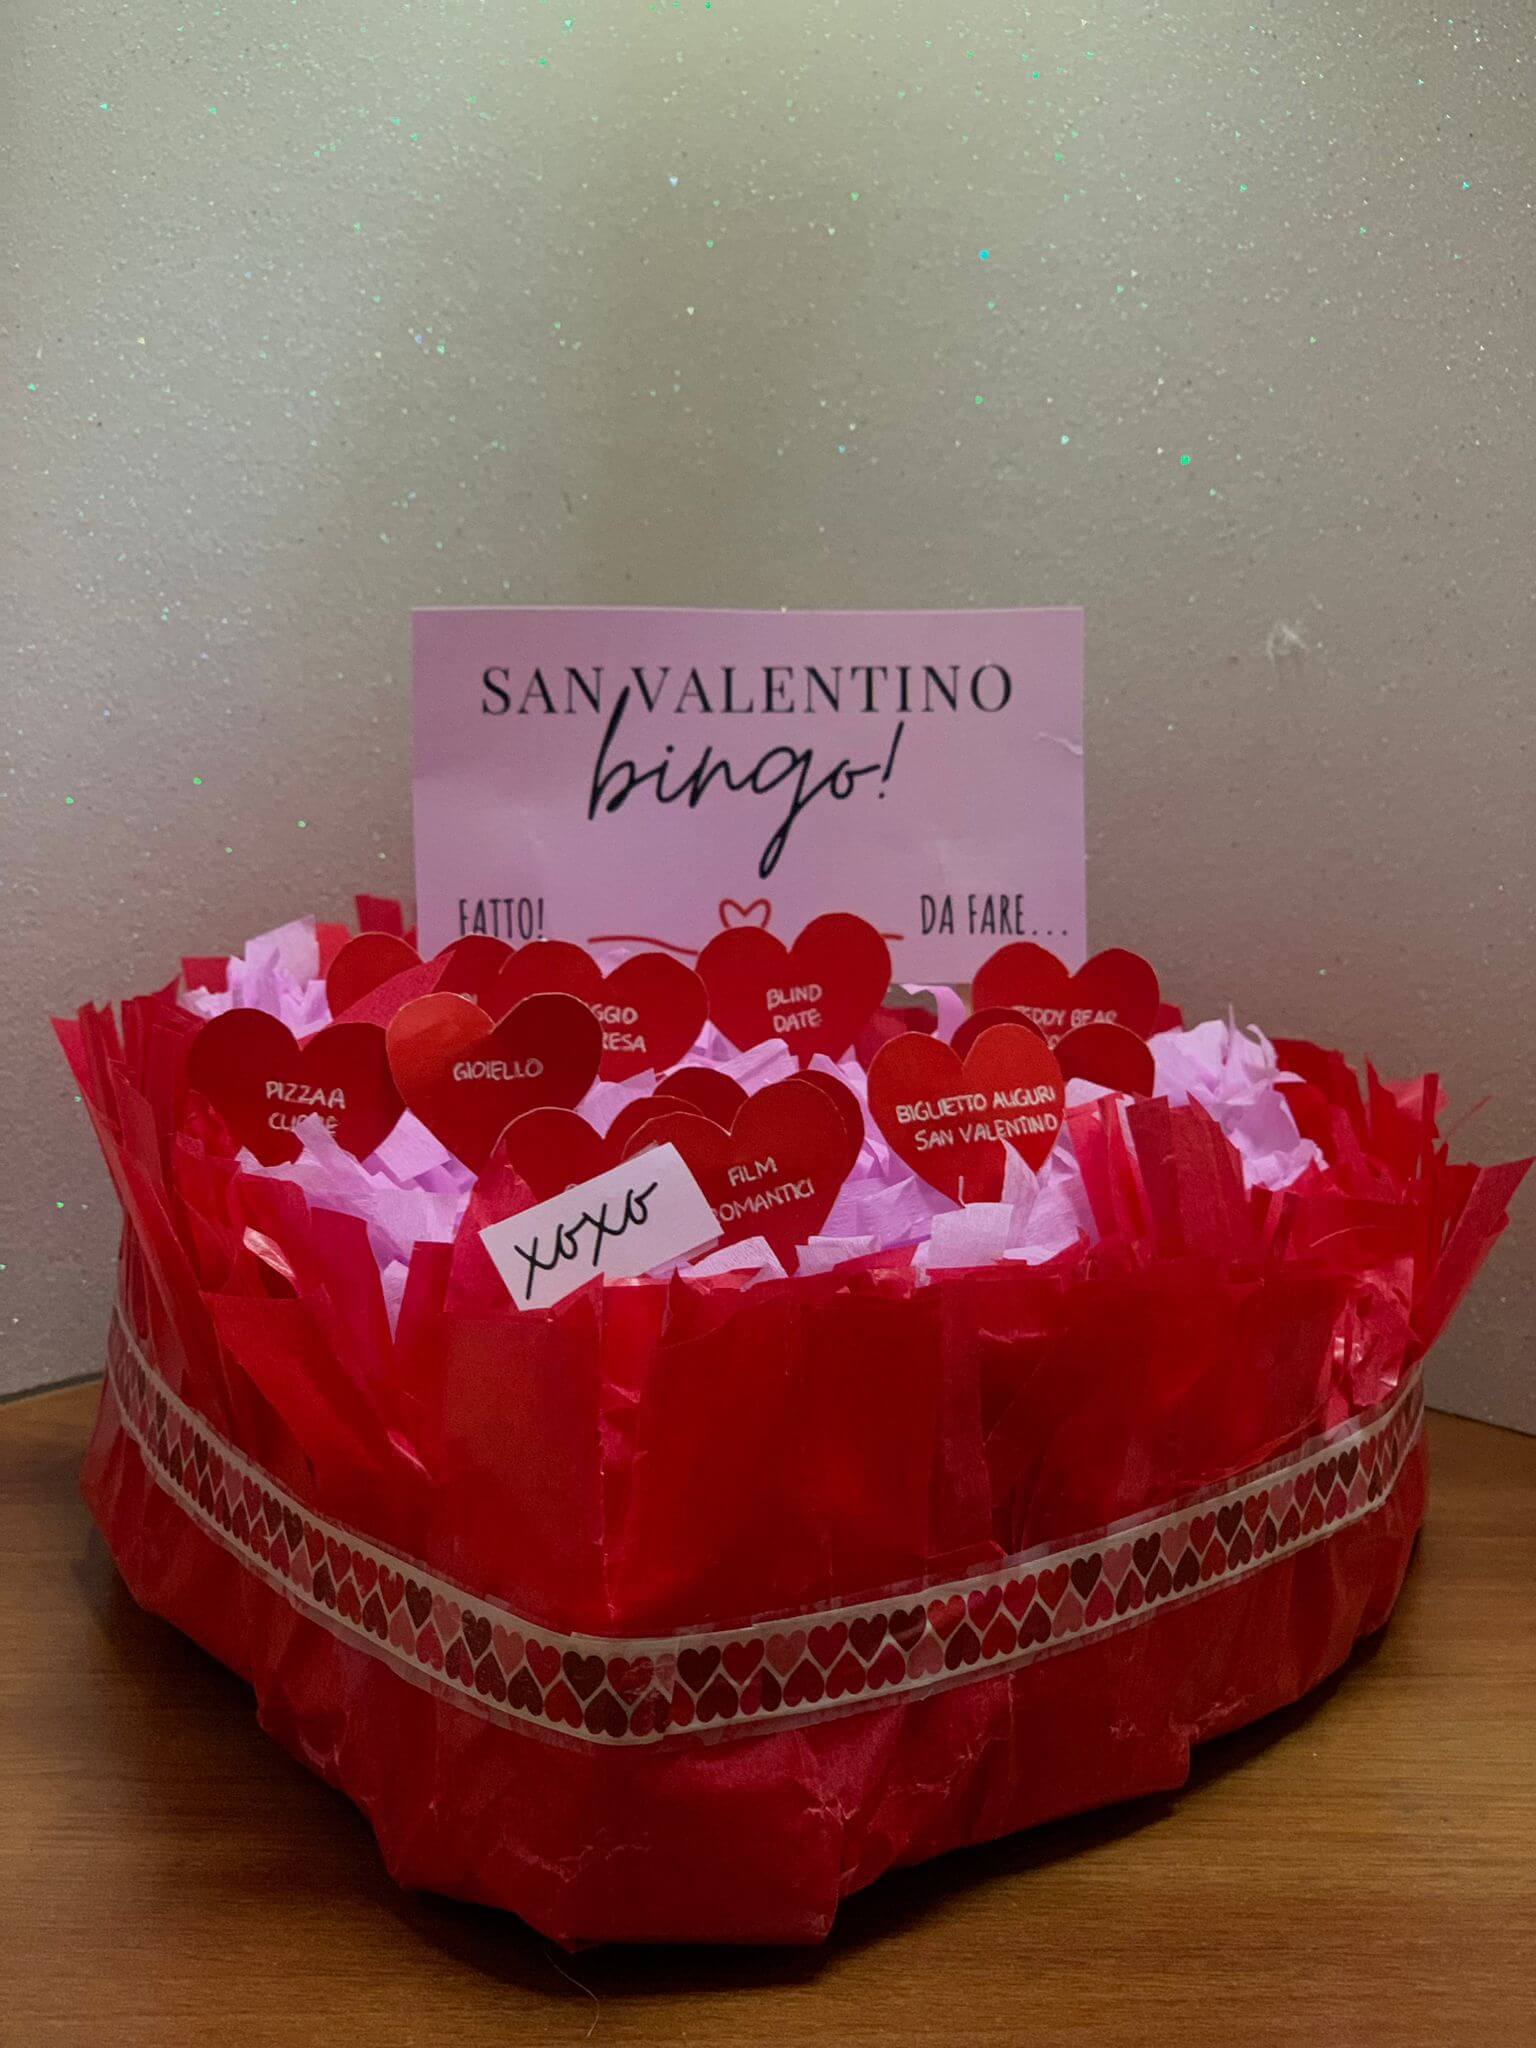 kit torta san valentino - Roma